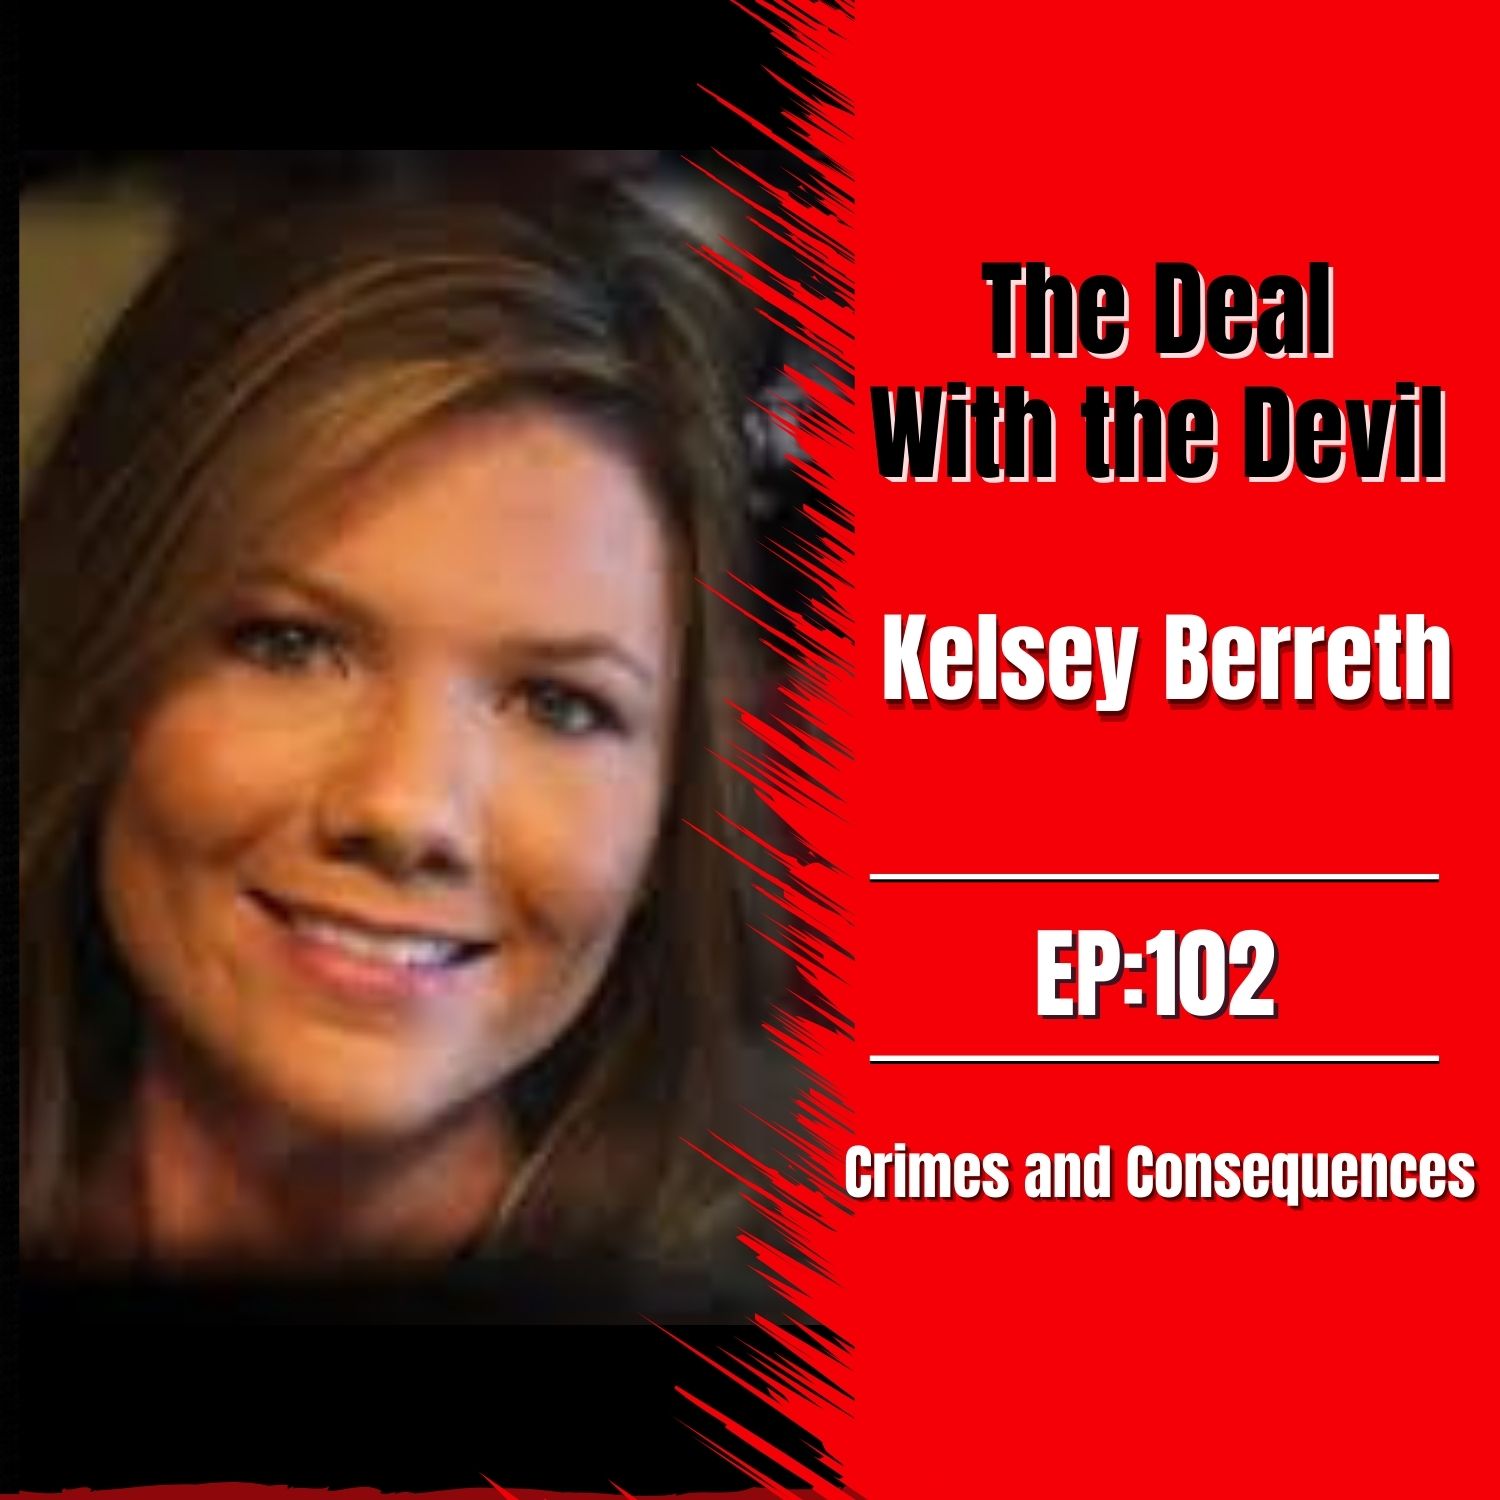 Kelsey Berreth